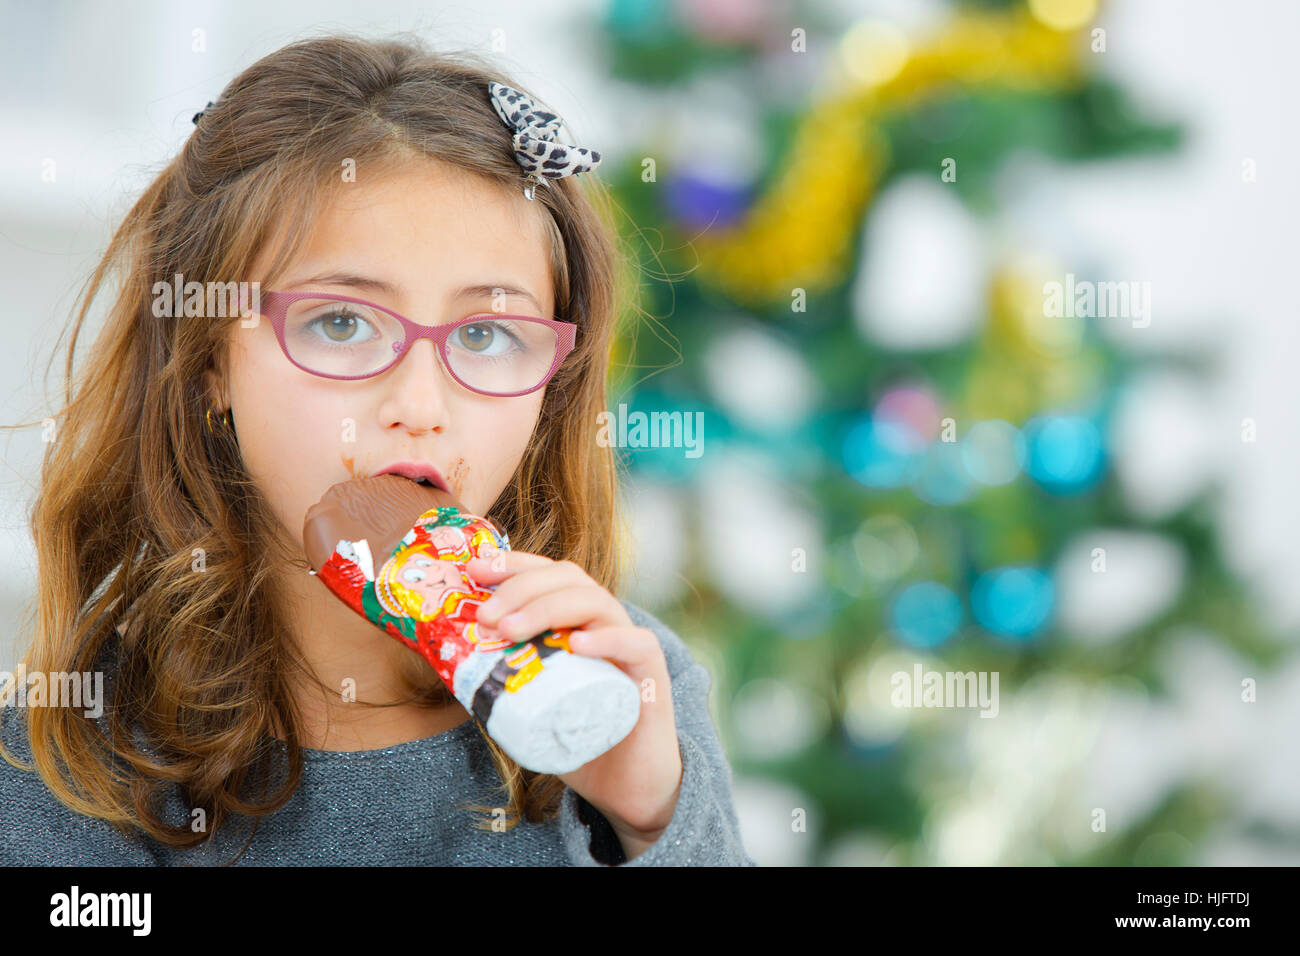 Little girl eating chocolate at Christmas Stock Photo